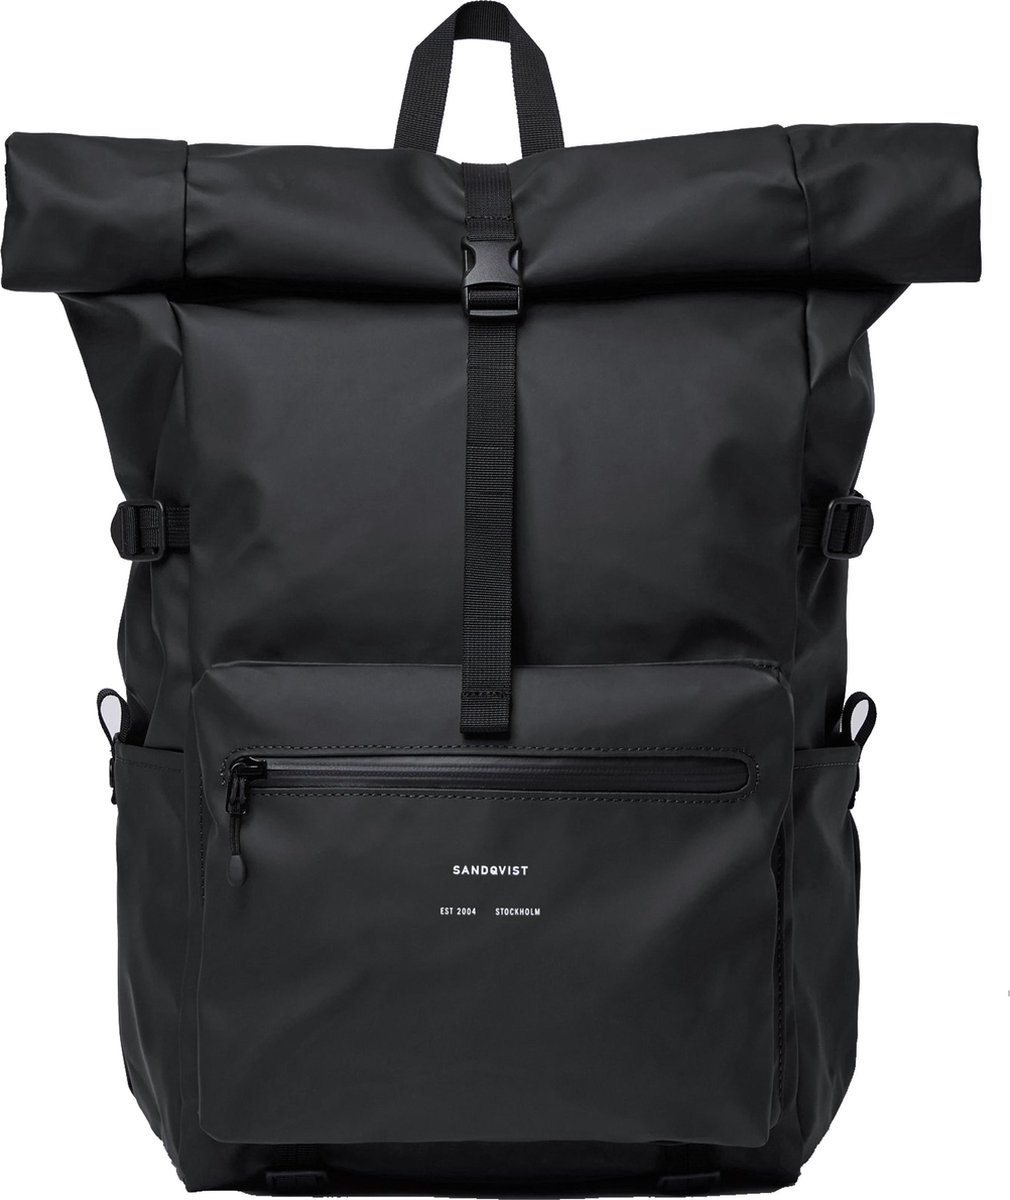 Sandqvist Rugzak Ruben Black SQA1186 Backpack Laptop 13 inch zwart